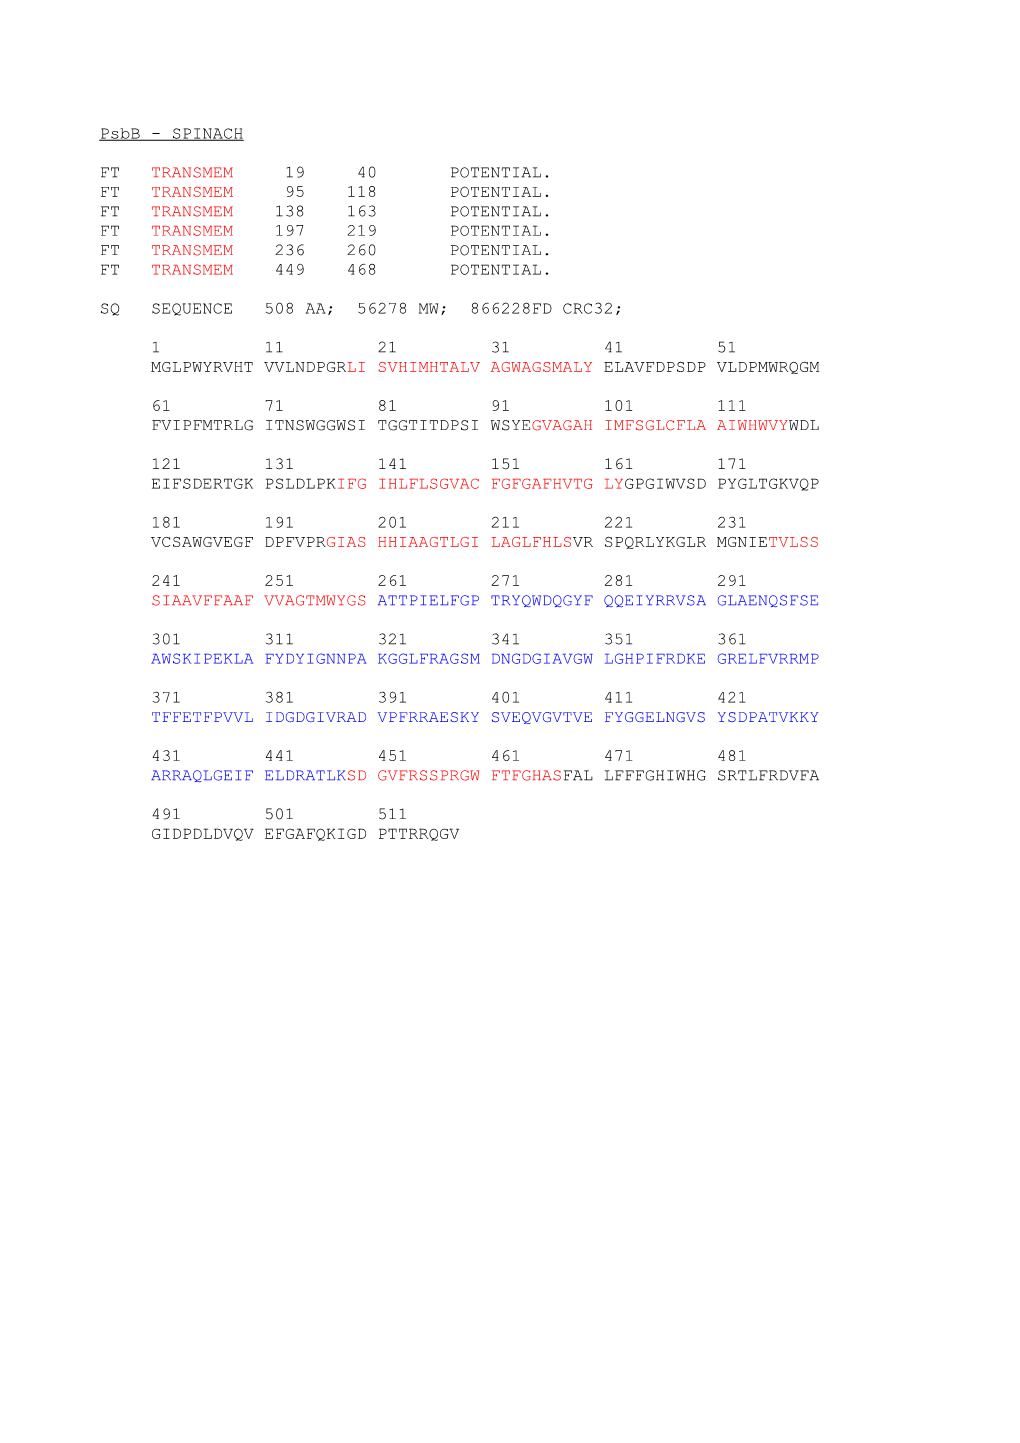 Psb Gene Product SWISS-PROT Database Searching Jon Nield 08/04/99